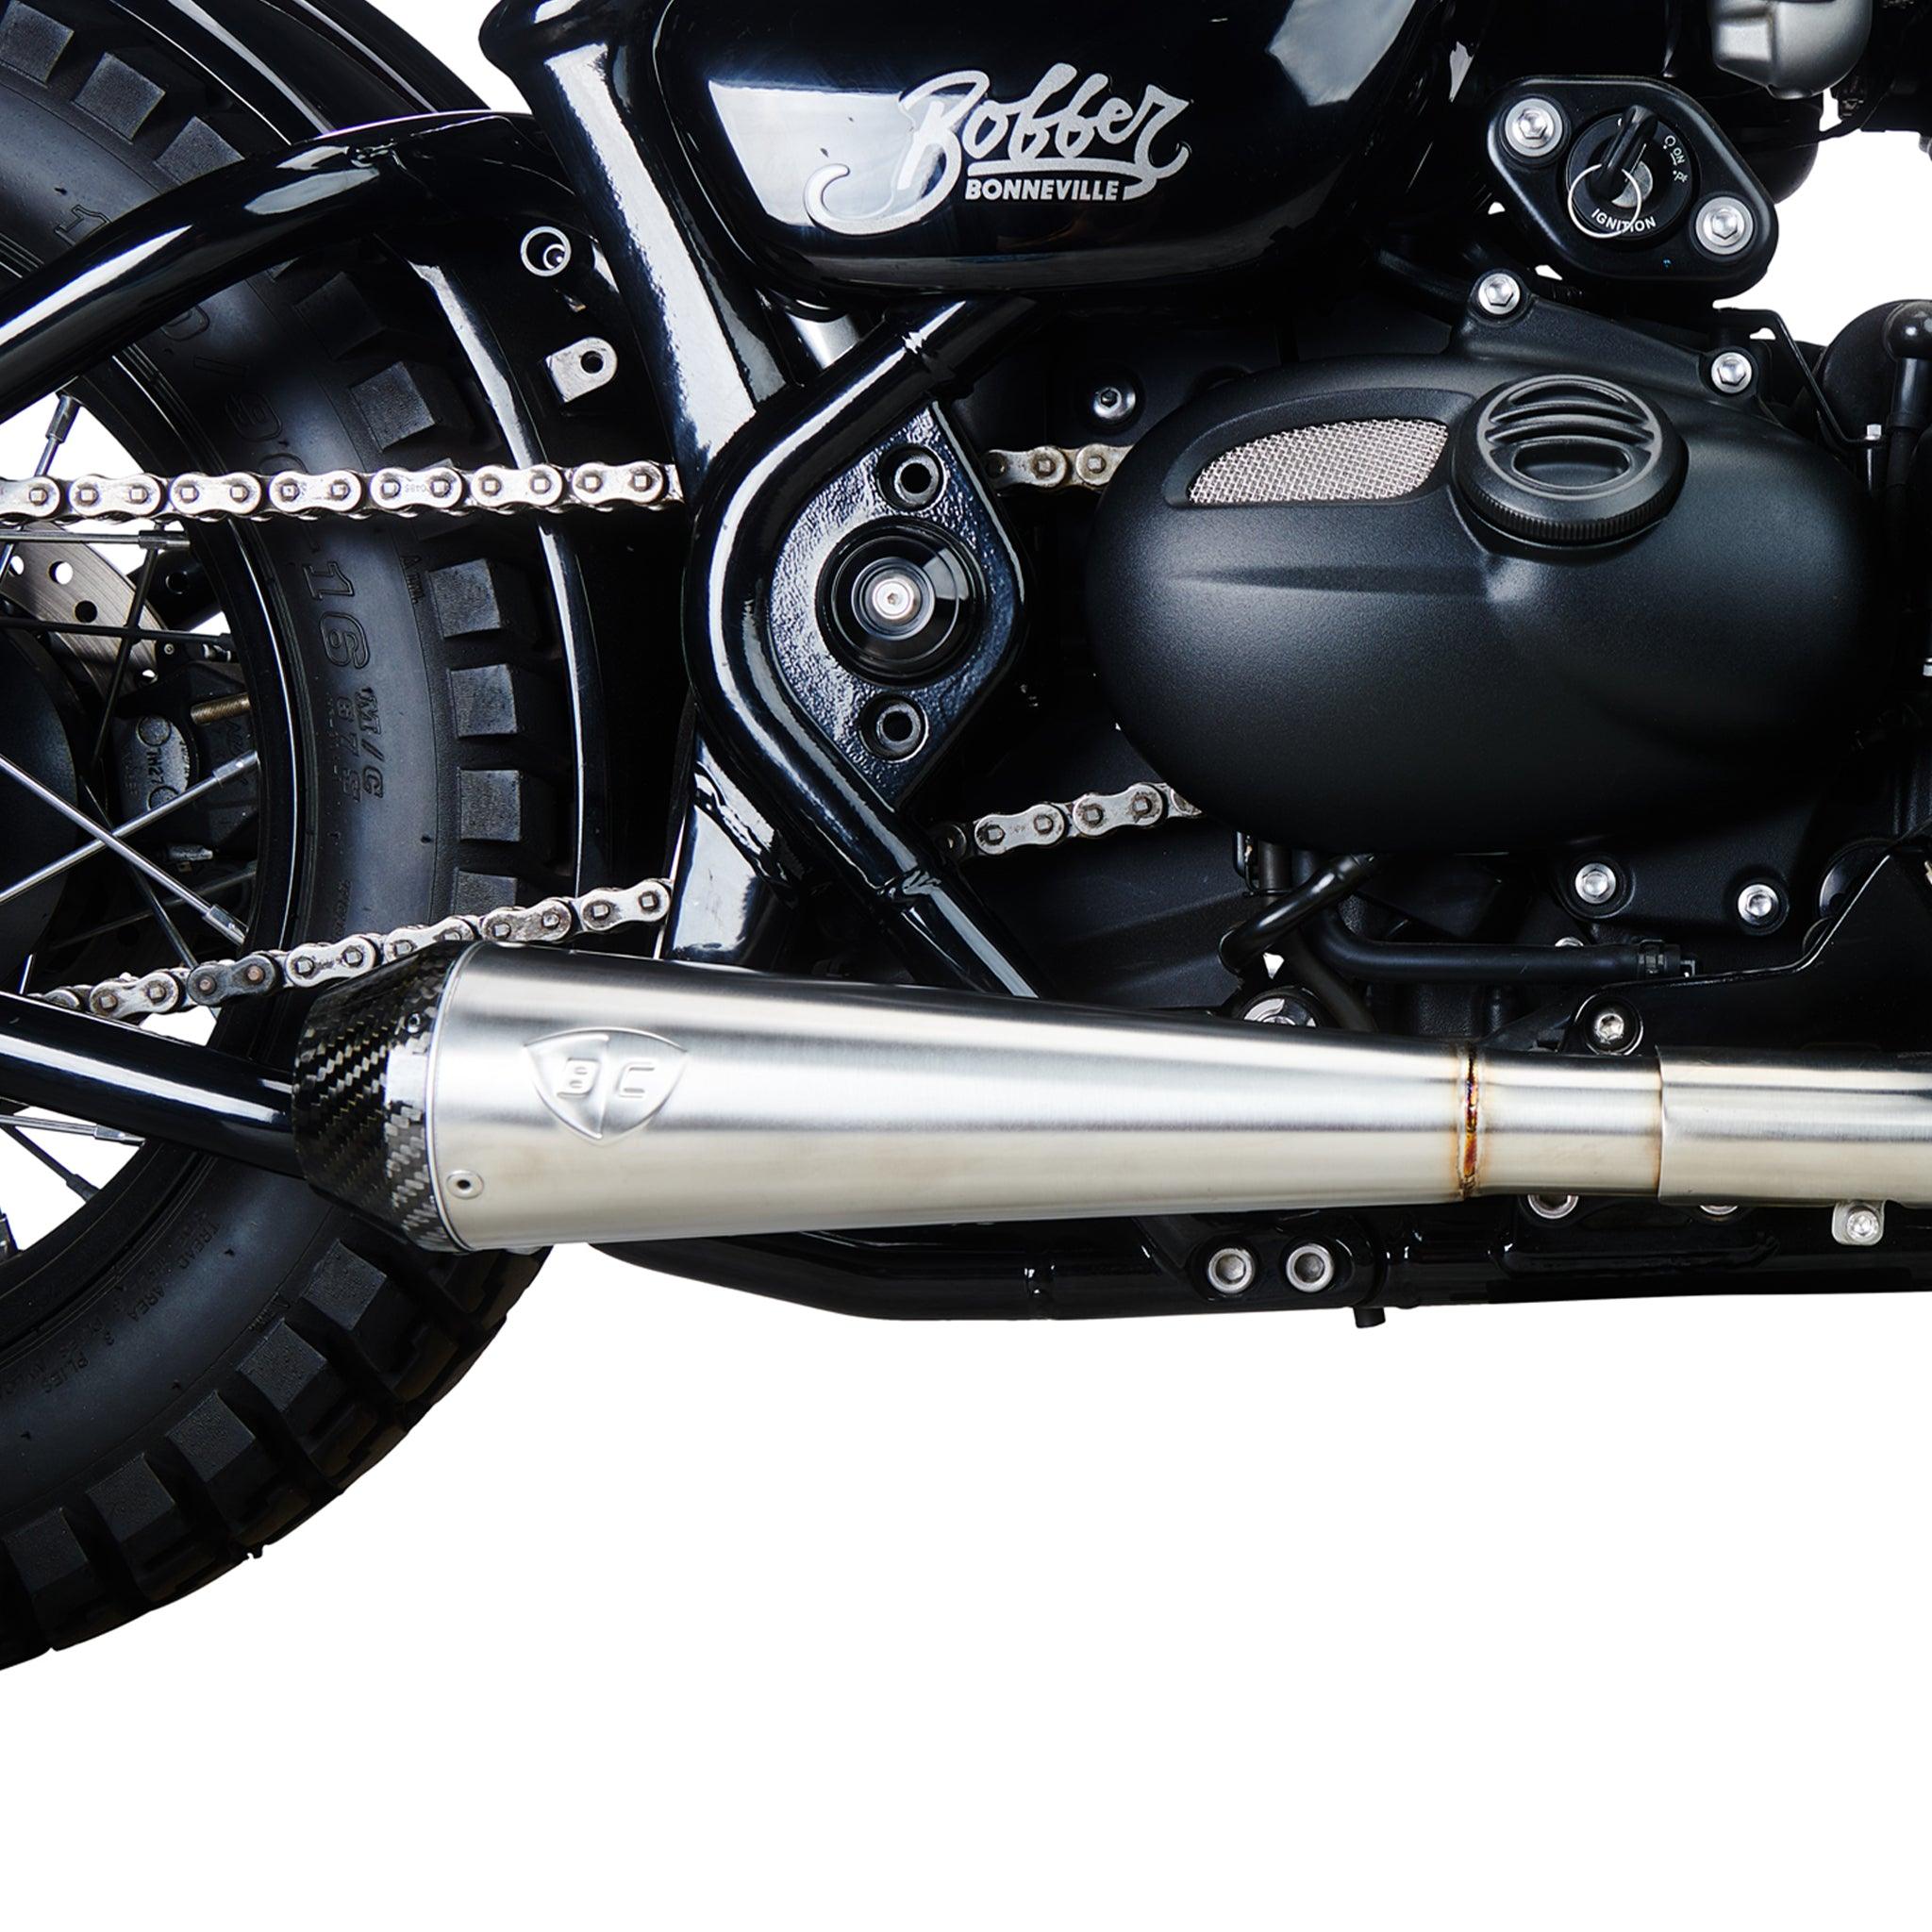 Predator Carbon Slip On Exhaust for Triumph Motorcycle - British Customs